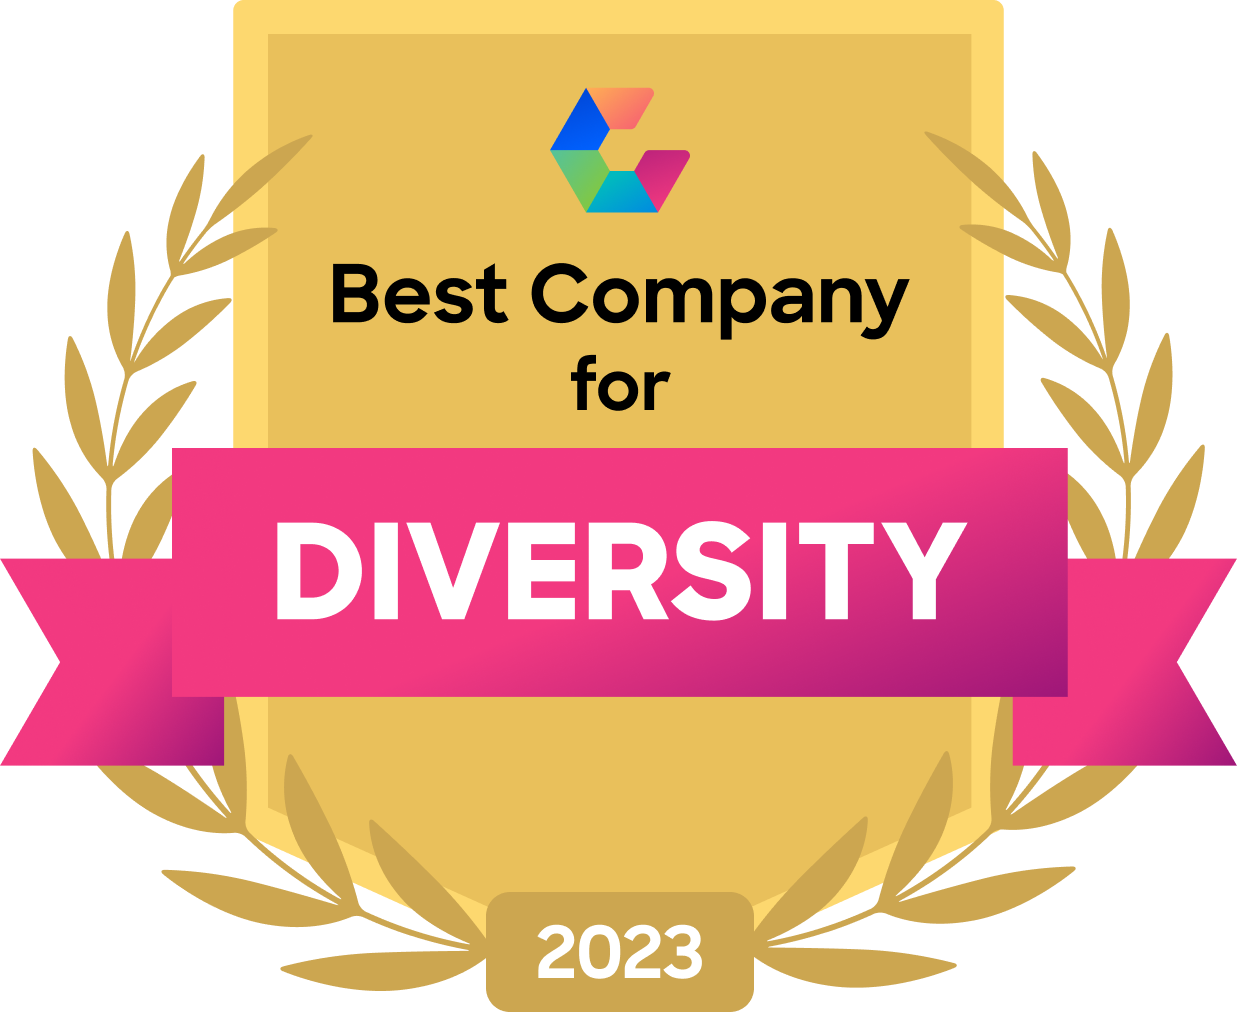 Best Company for Diversity Award